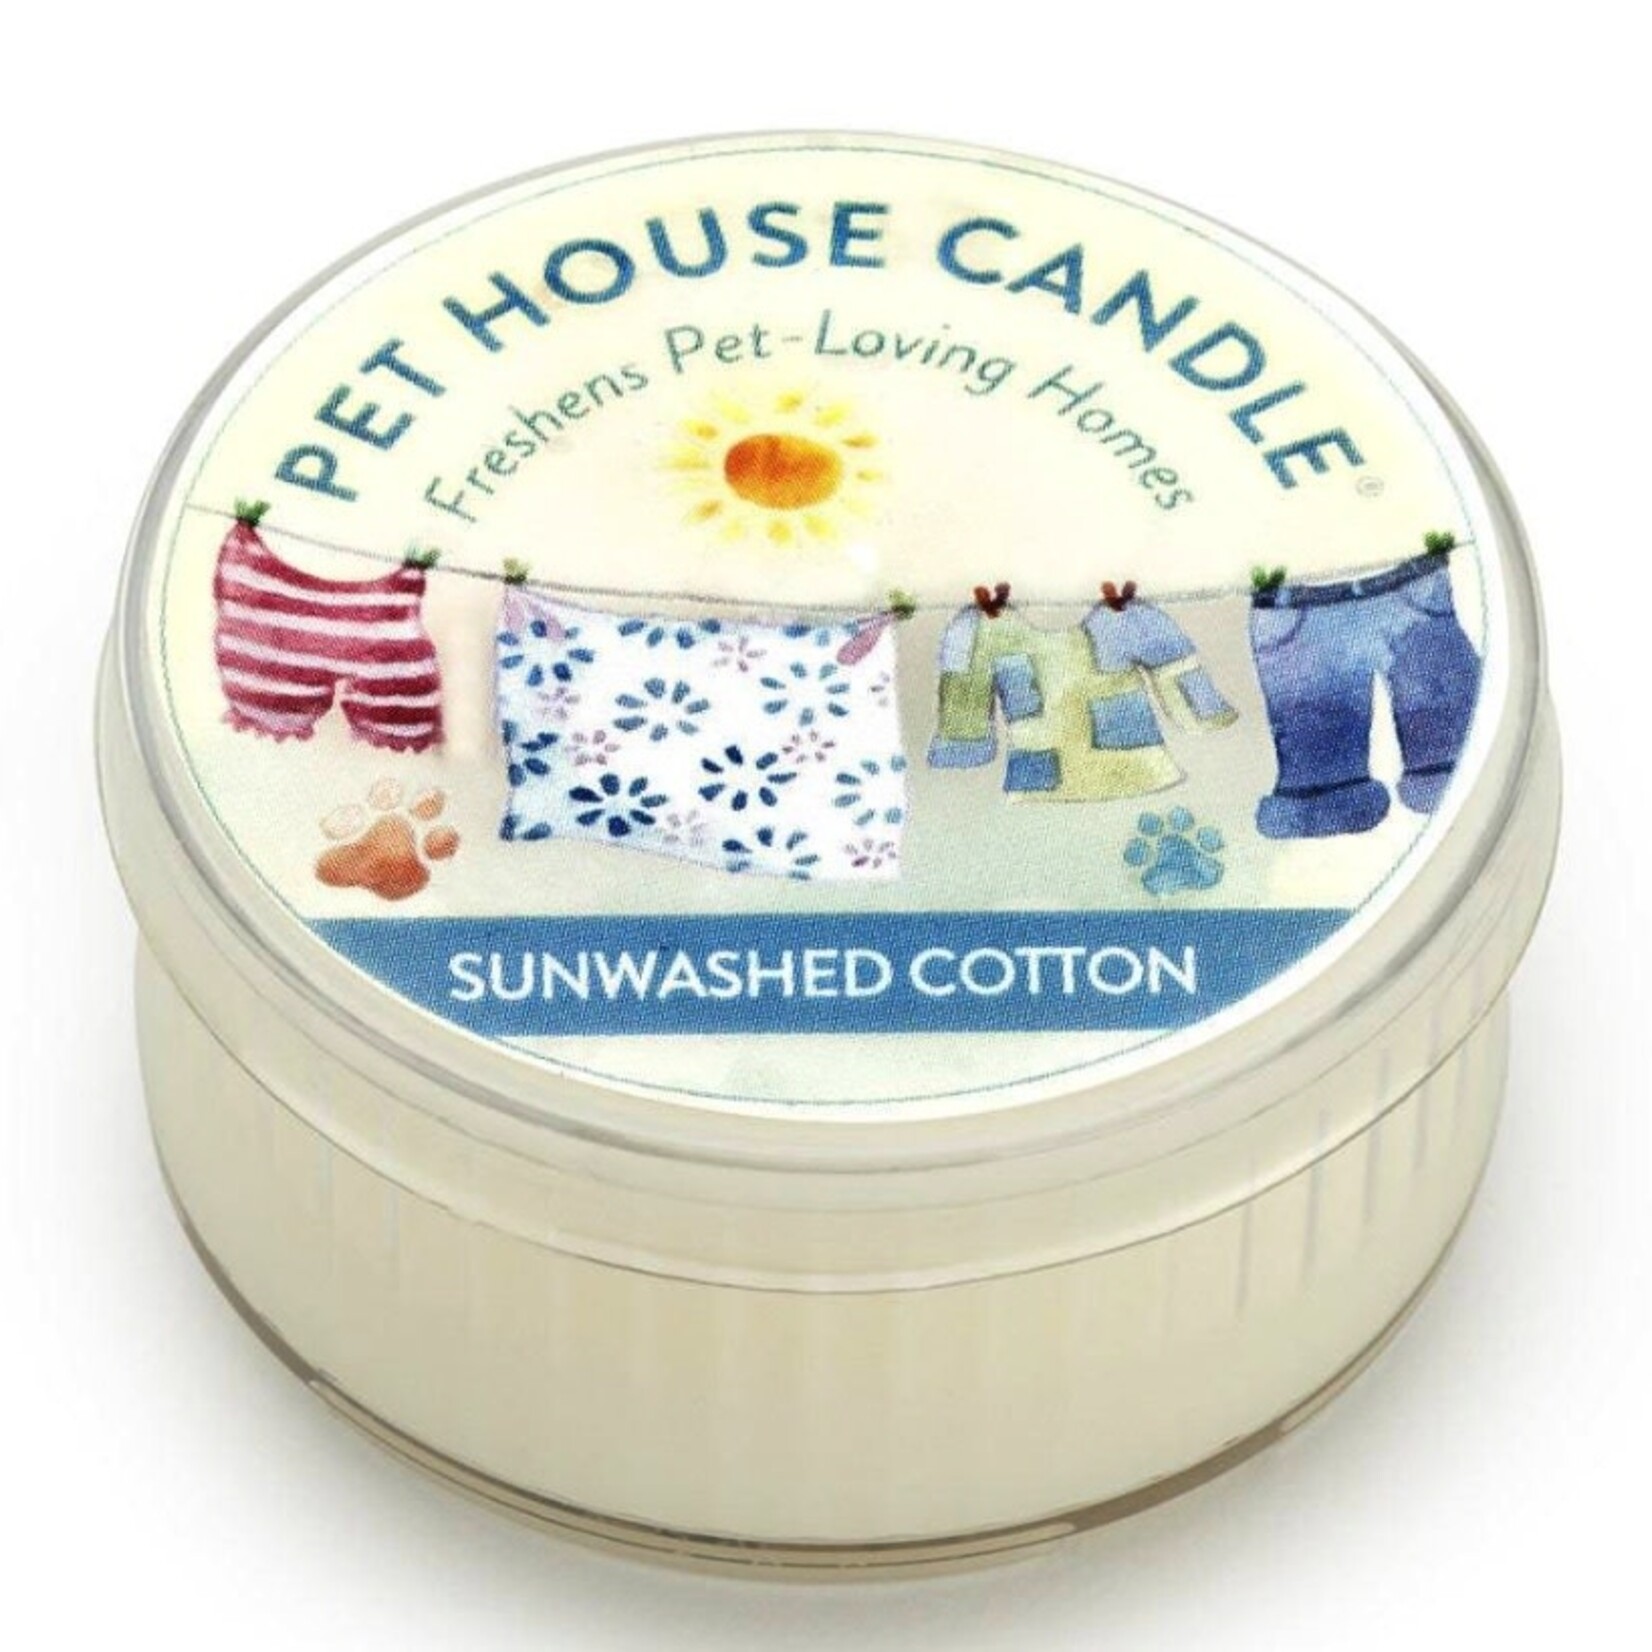 PET HOUSE CANDLE Pet House Mini Candles Sunwashed Cotton